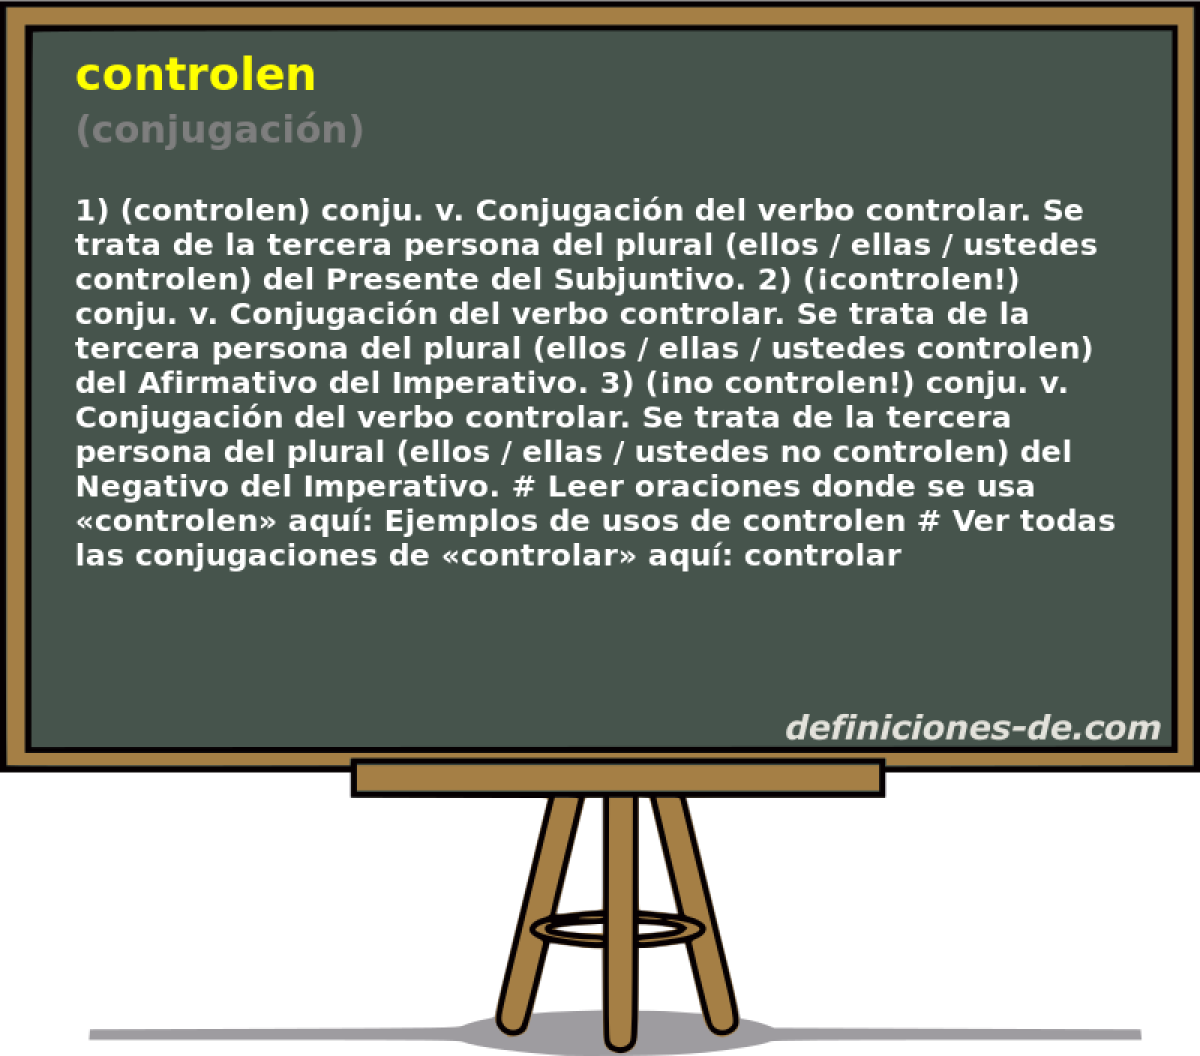 controlen (conjugacin)